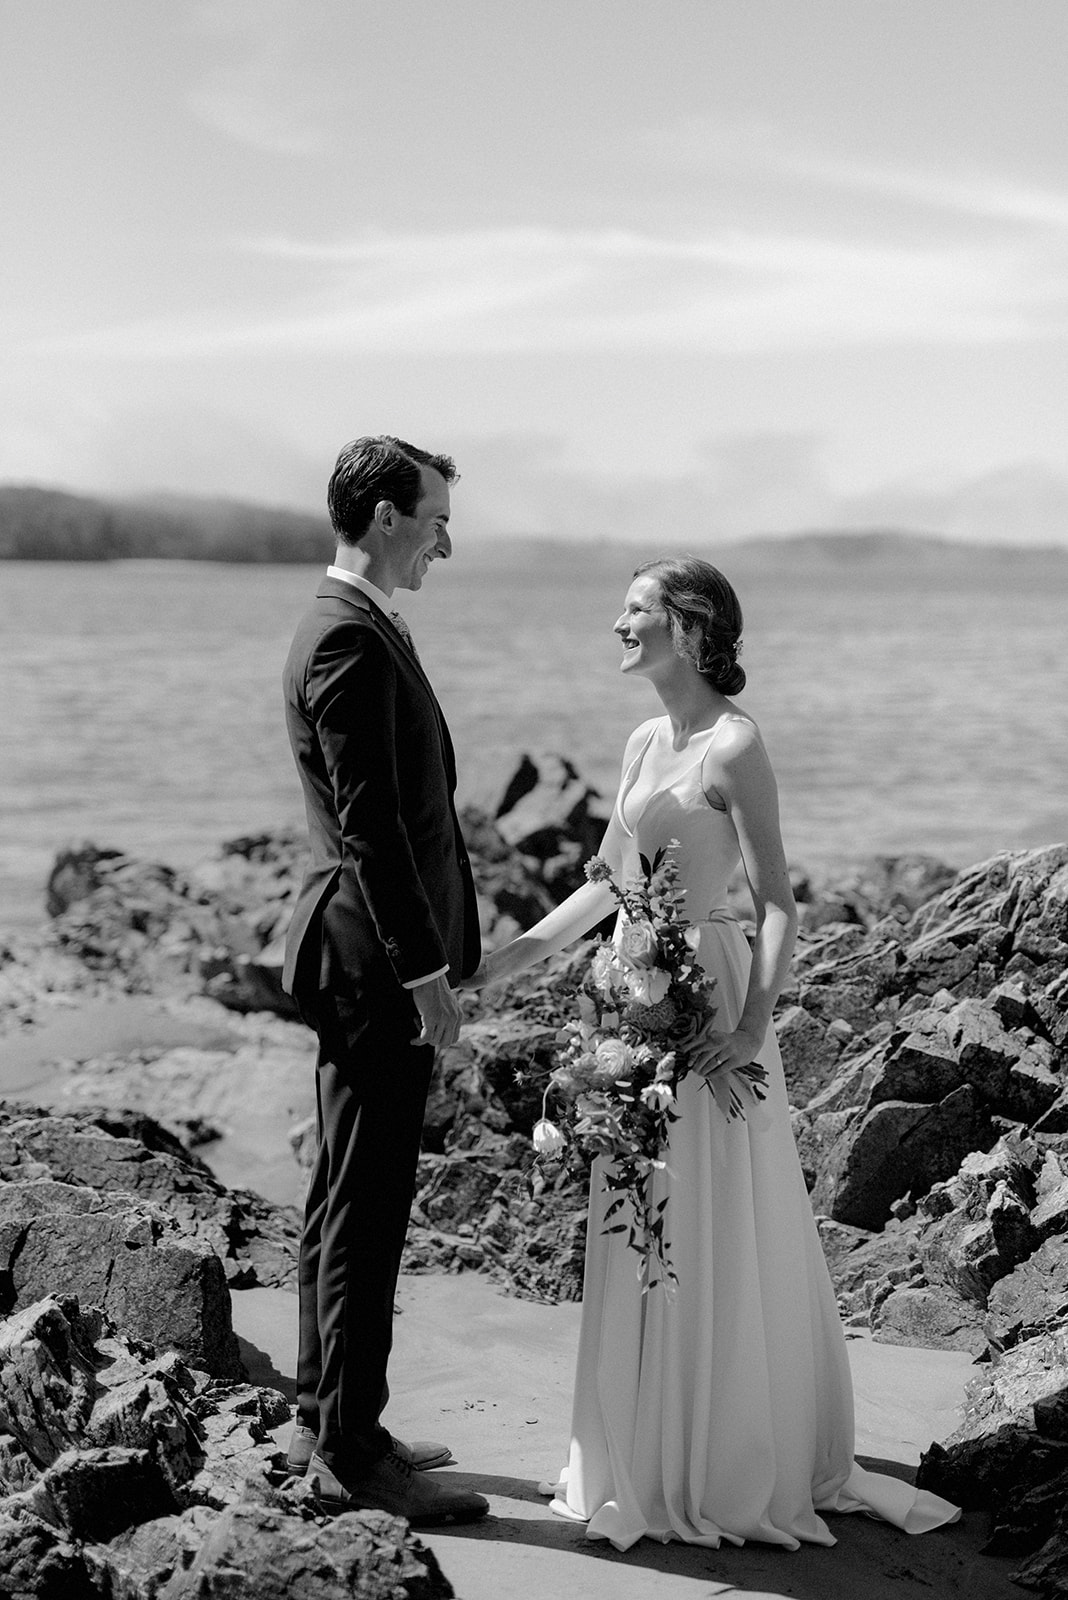 Vancouver wedding photographer captures photos of couple's wedding in Tofino, BC